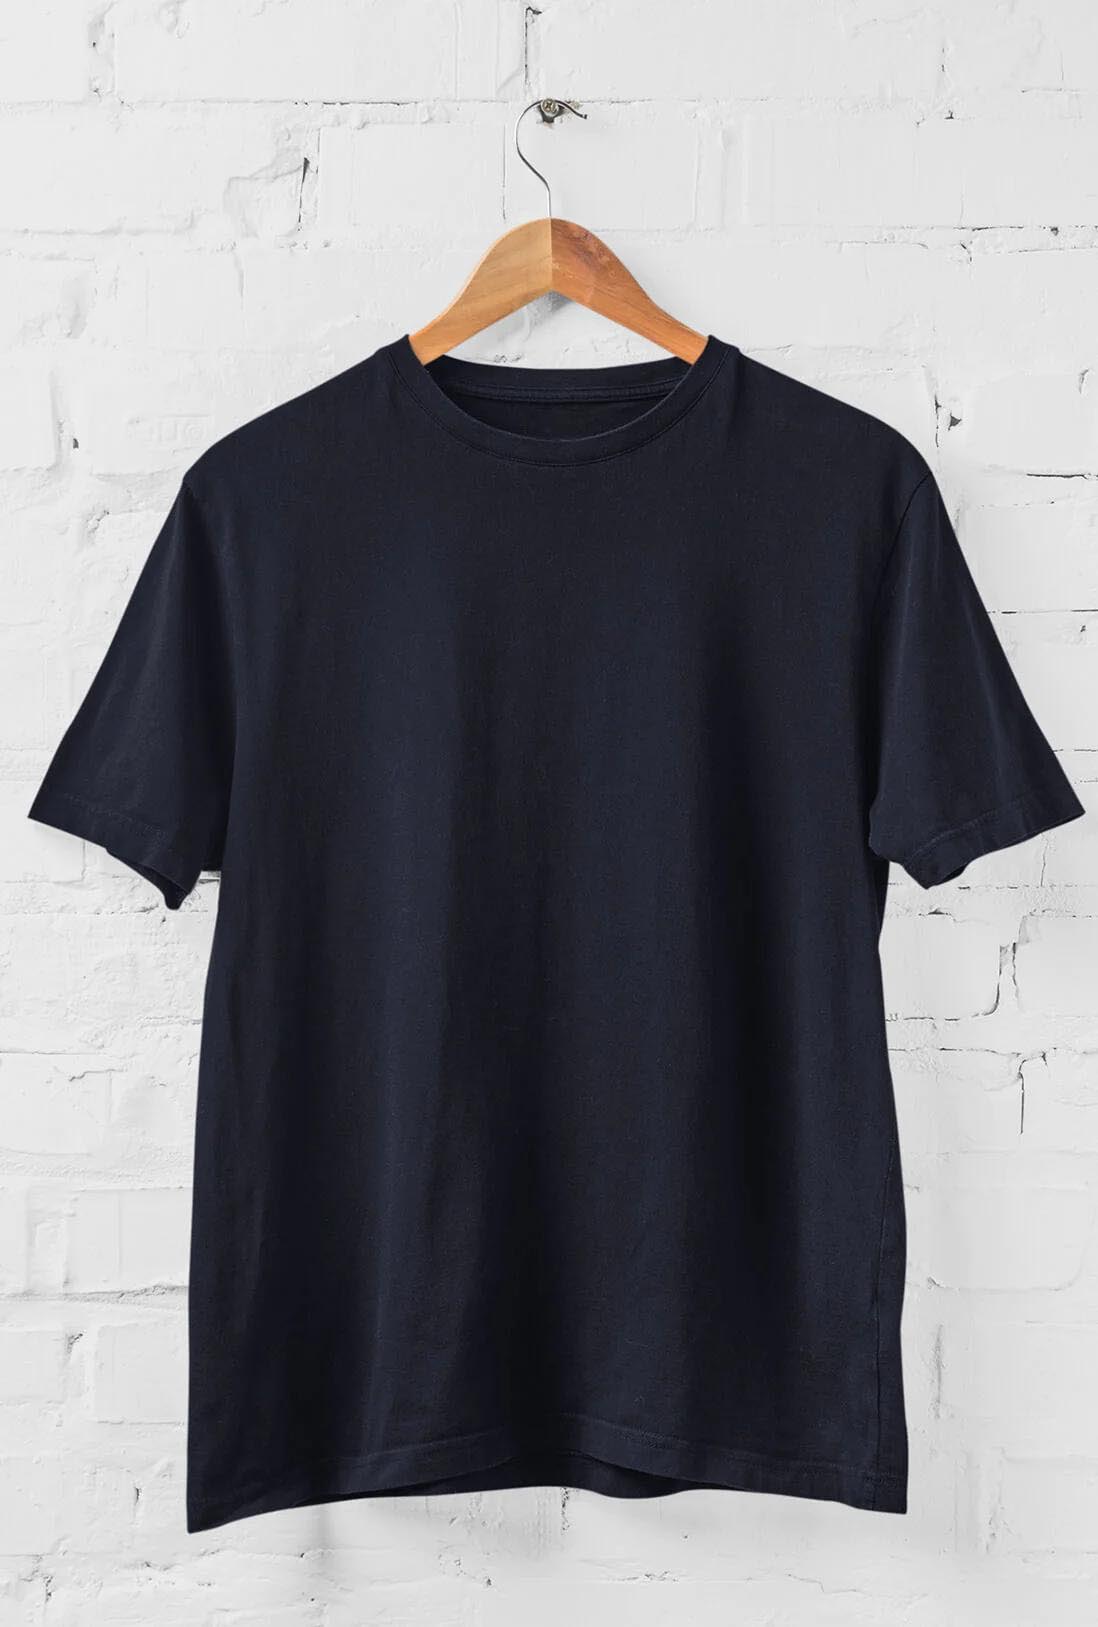 Men's Navy Blue Cotton T-Shirt